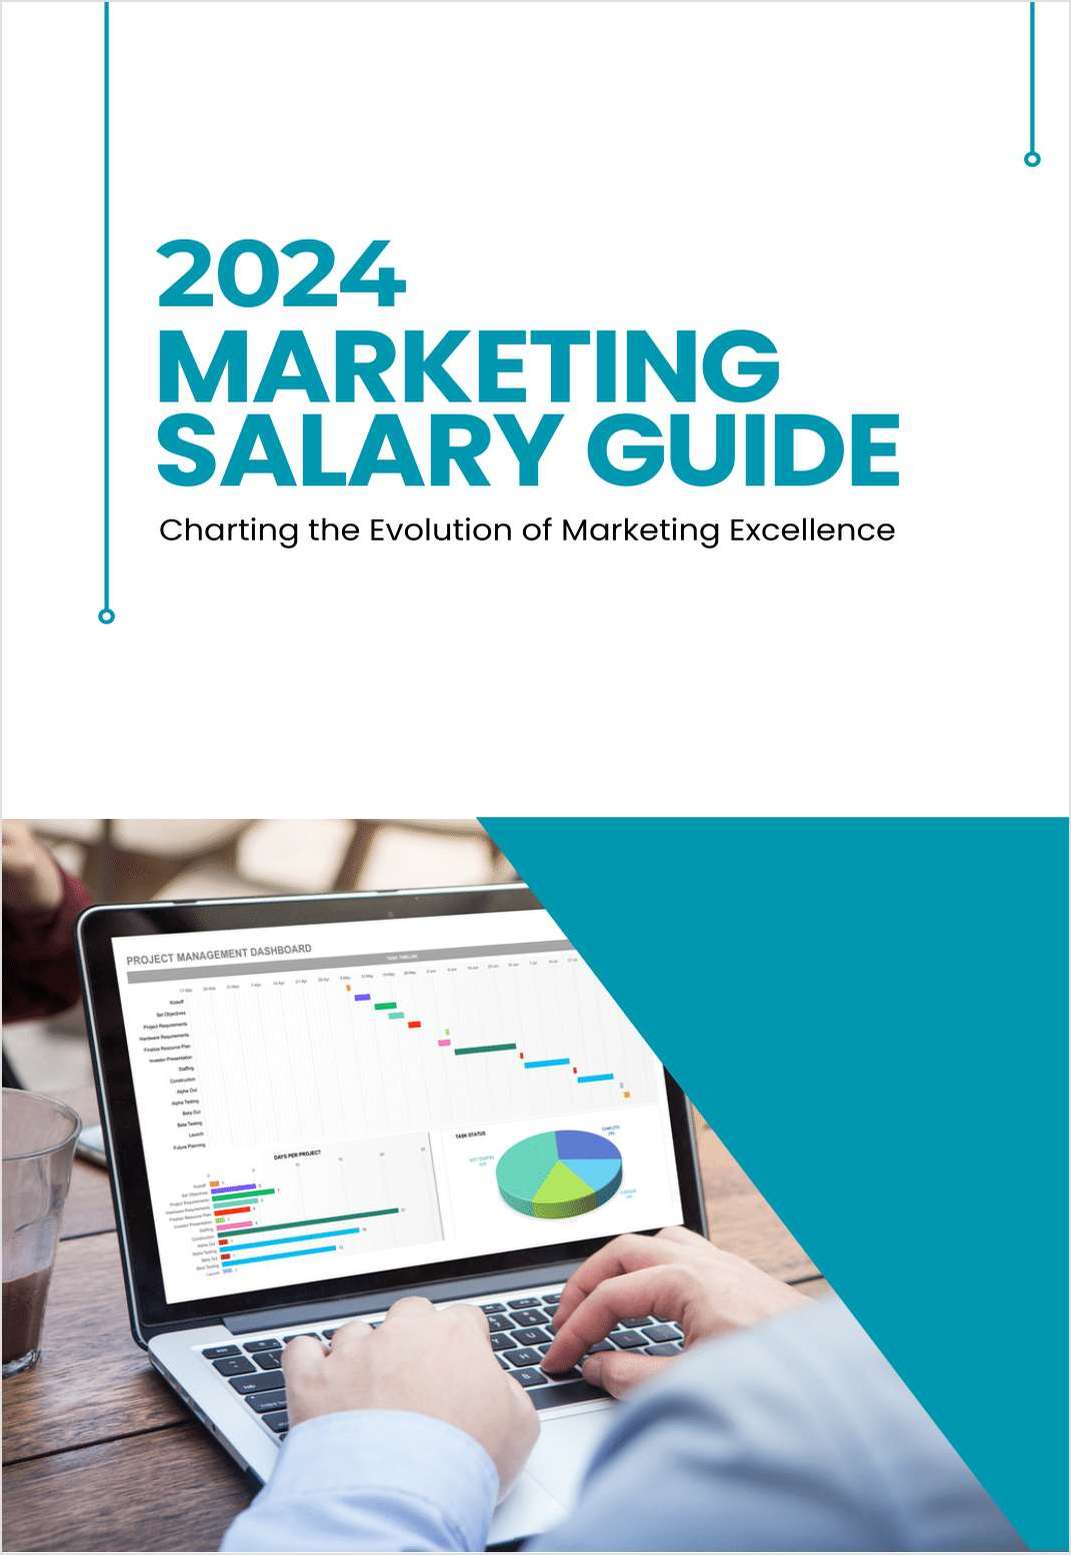 2024 Marketing Salary Guide